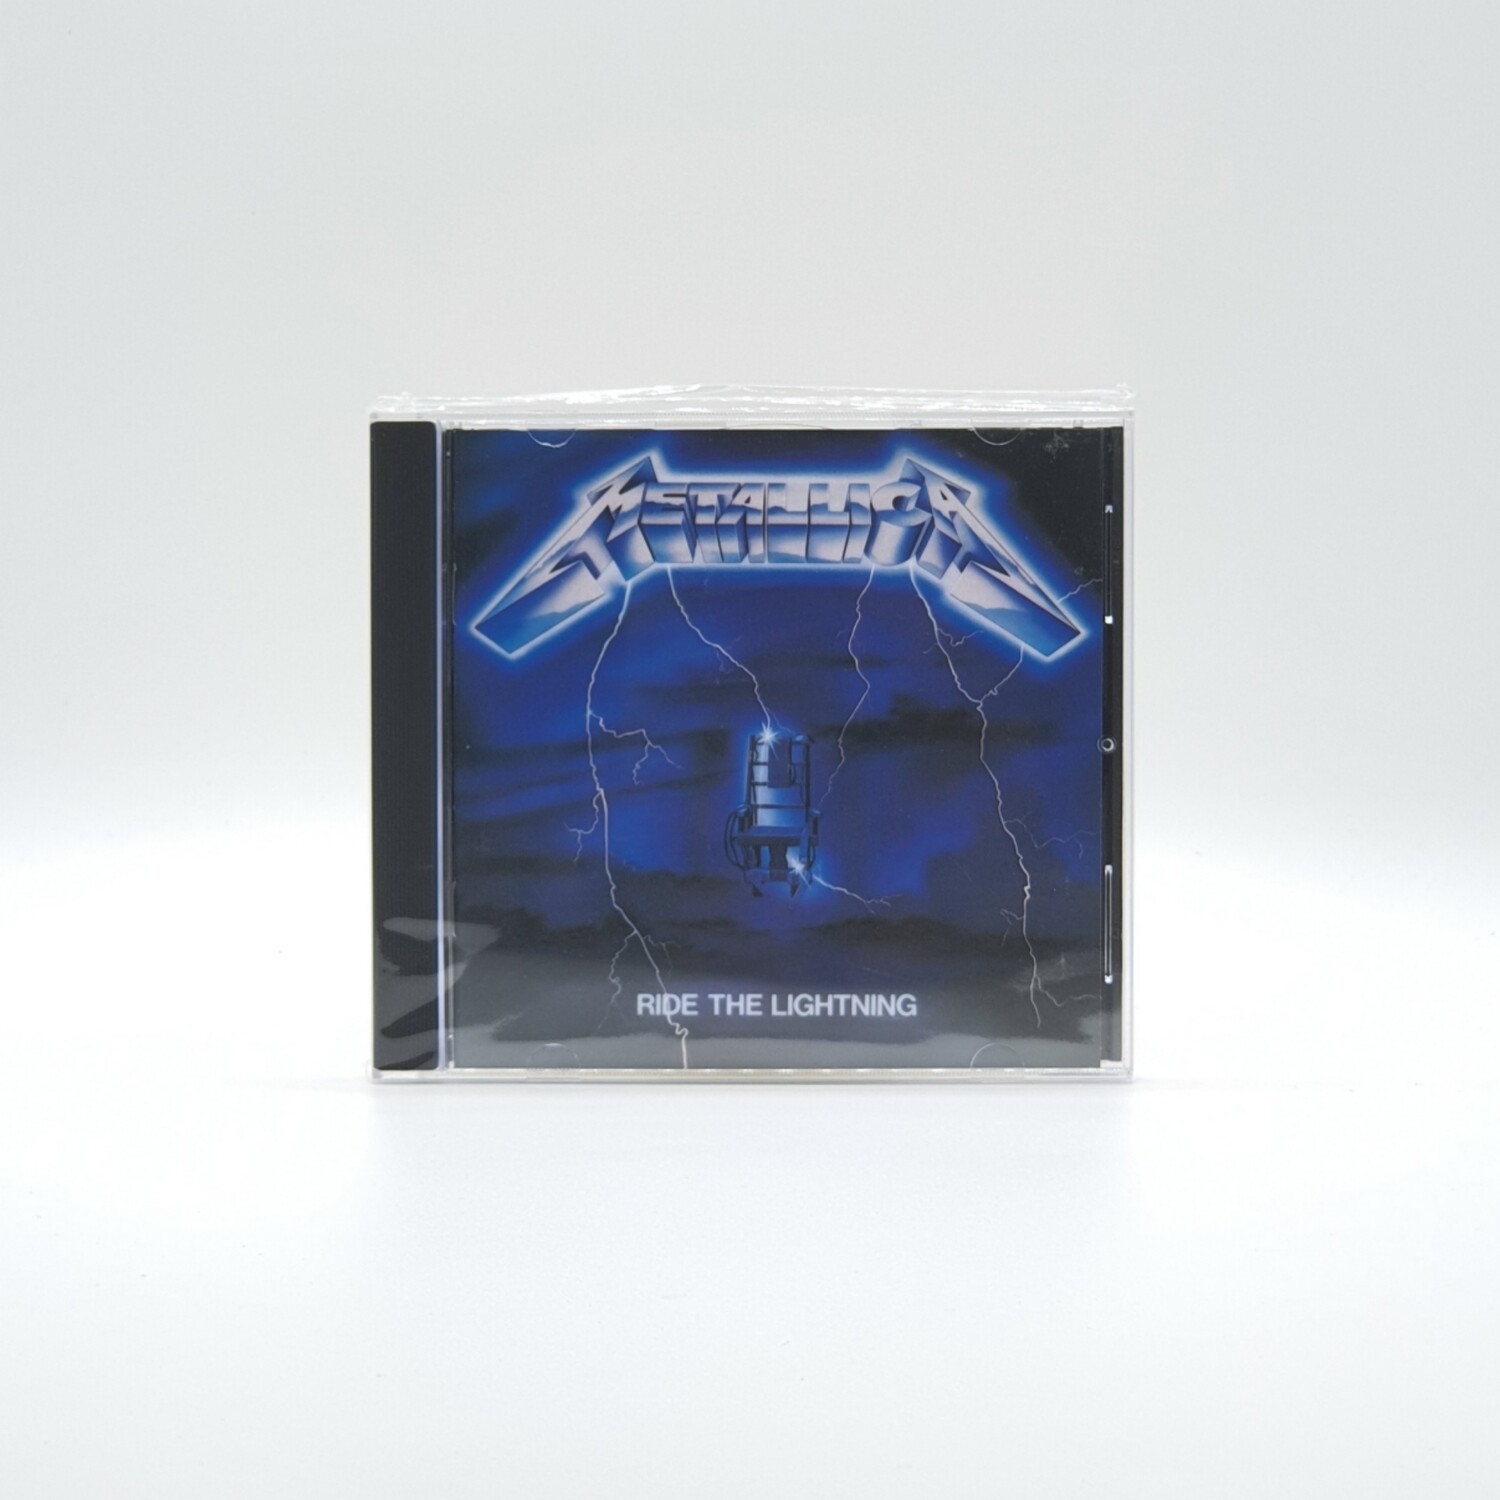 [USED] METALLICA -RIDE THE LIGHTNING- CD